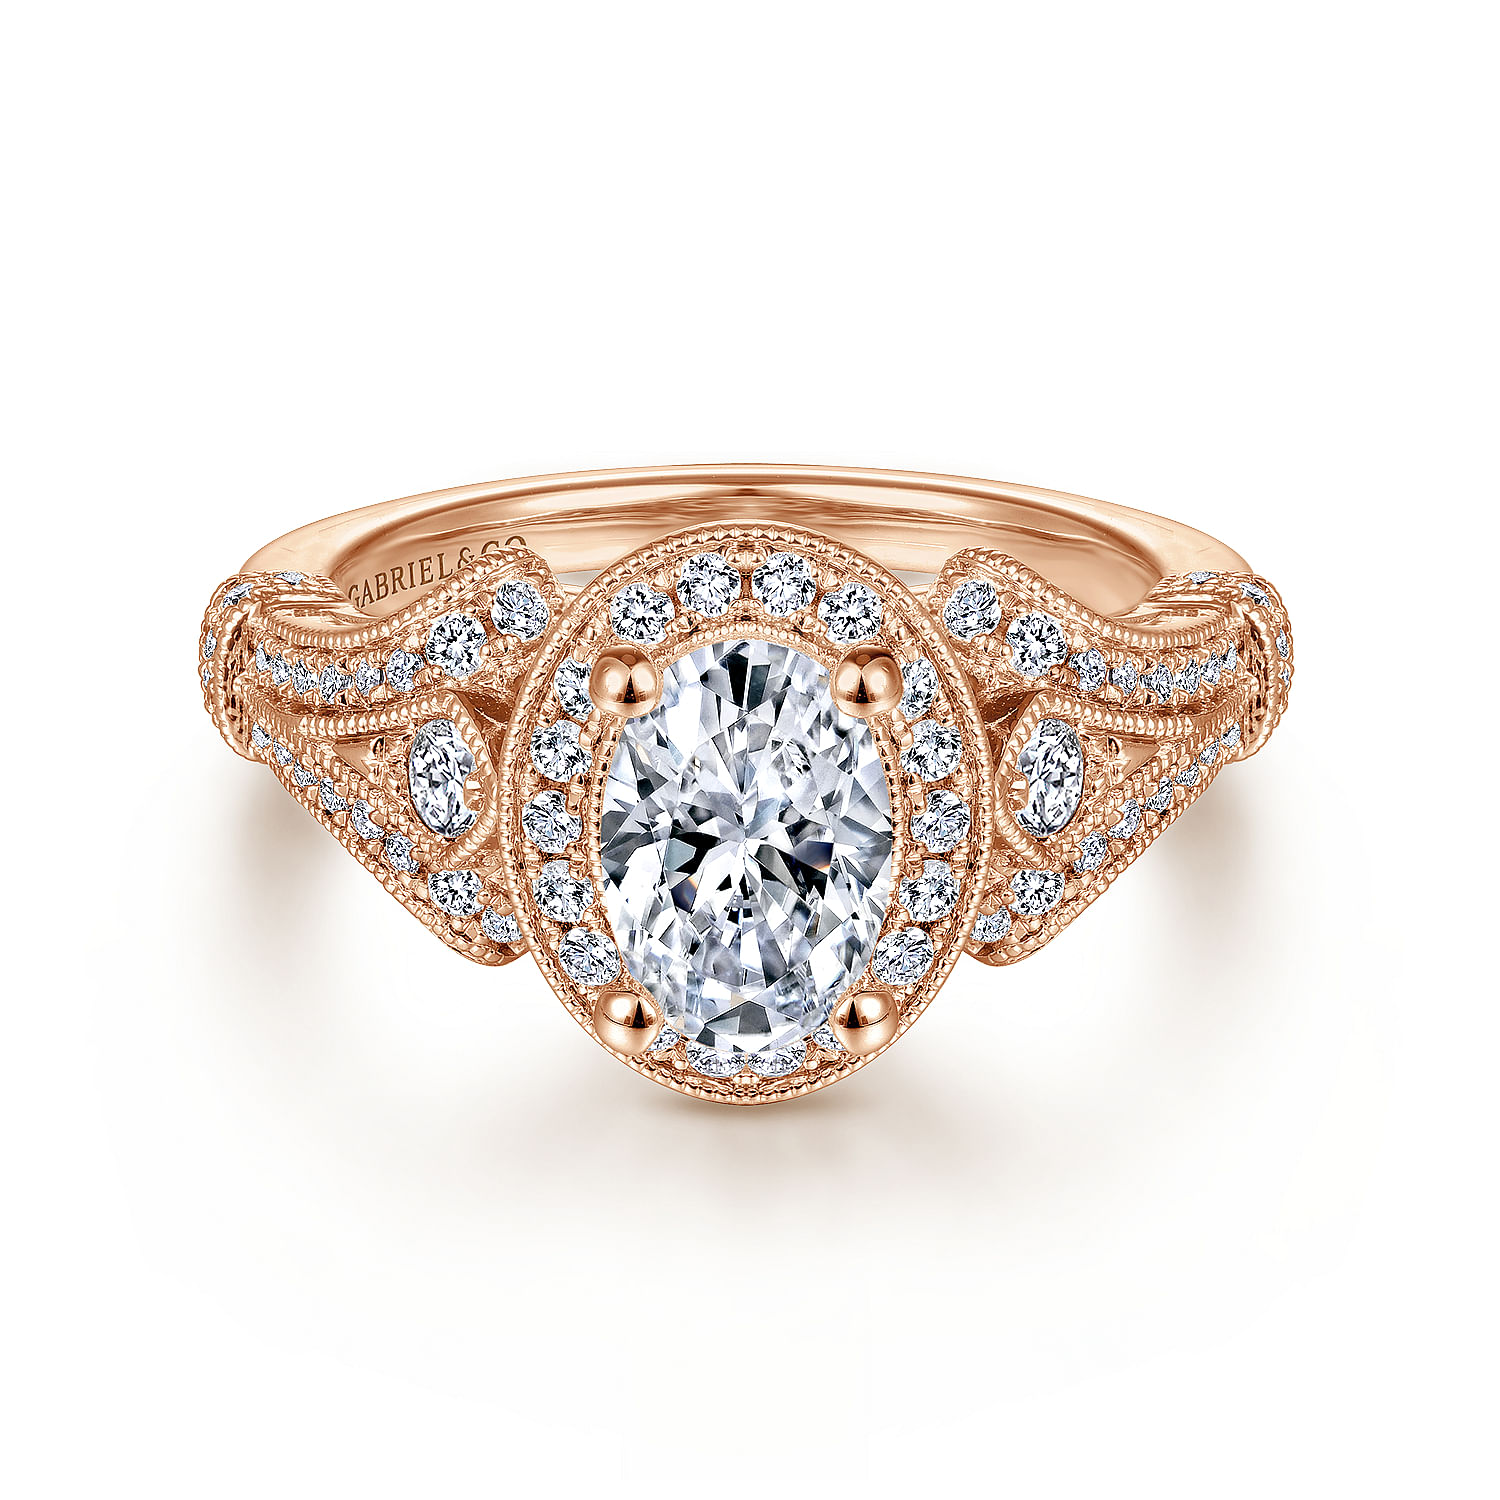 Gabriel - Vintage Inspired 14K Rose Gold Oval Halo Diamond Engagement Ring